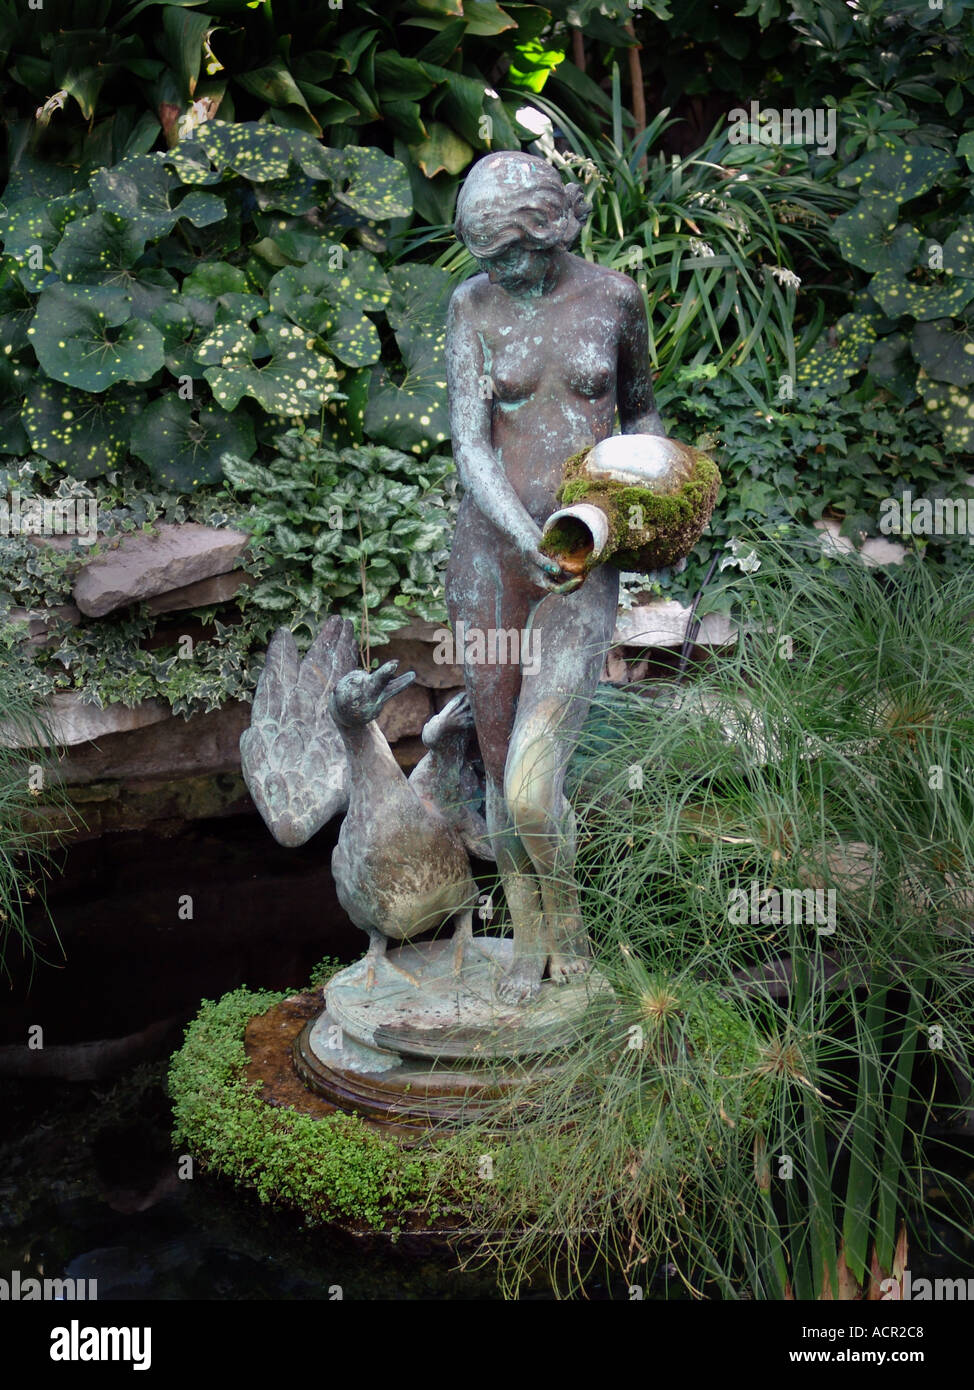 Figurative Sculpture, Fountain and Garden Sculpture